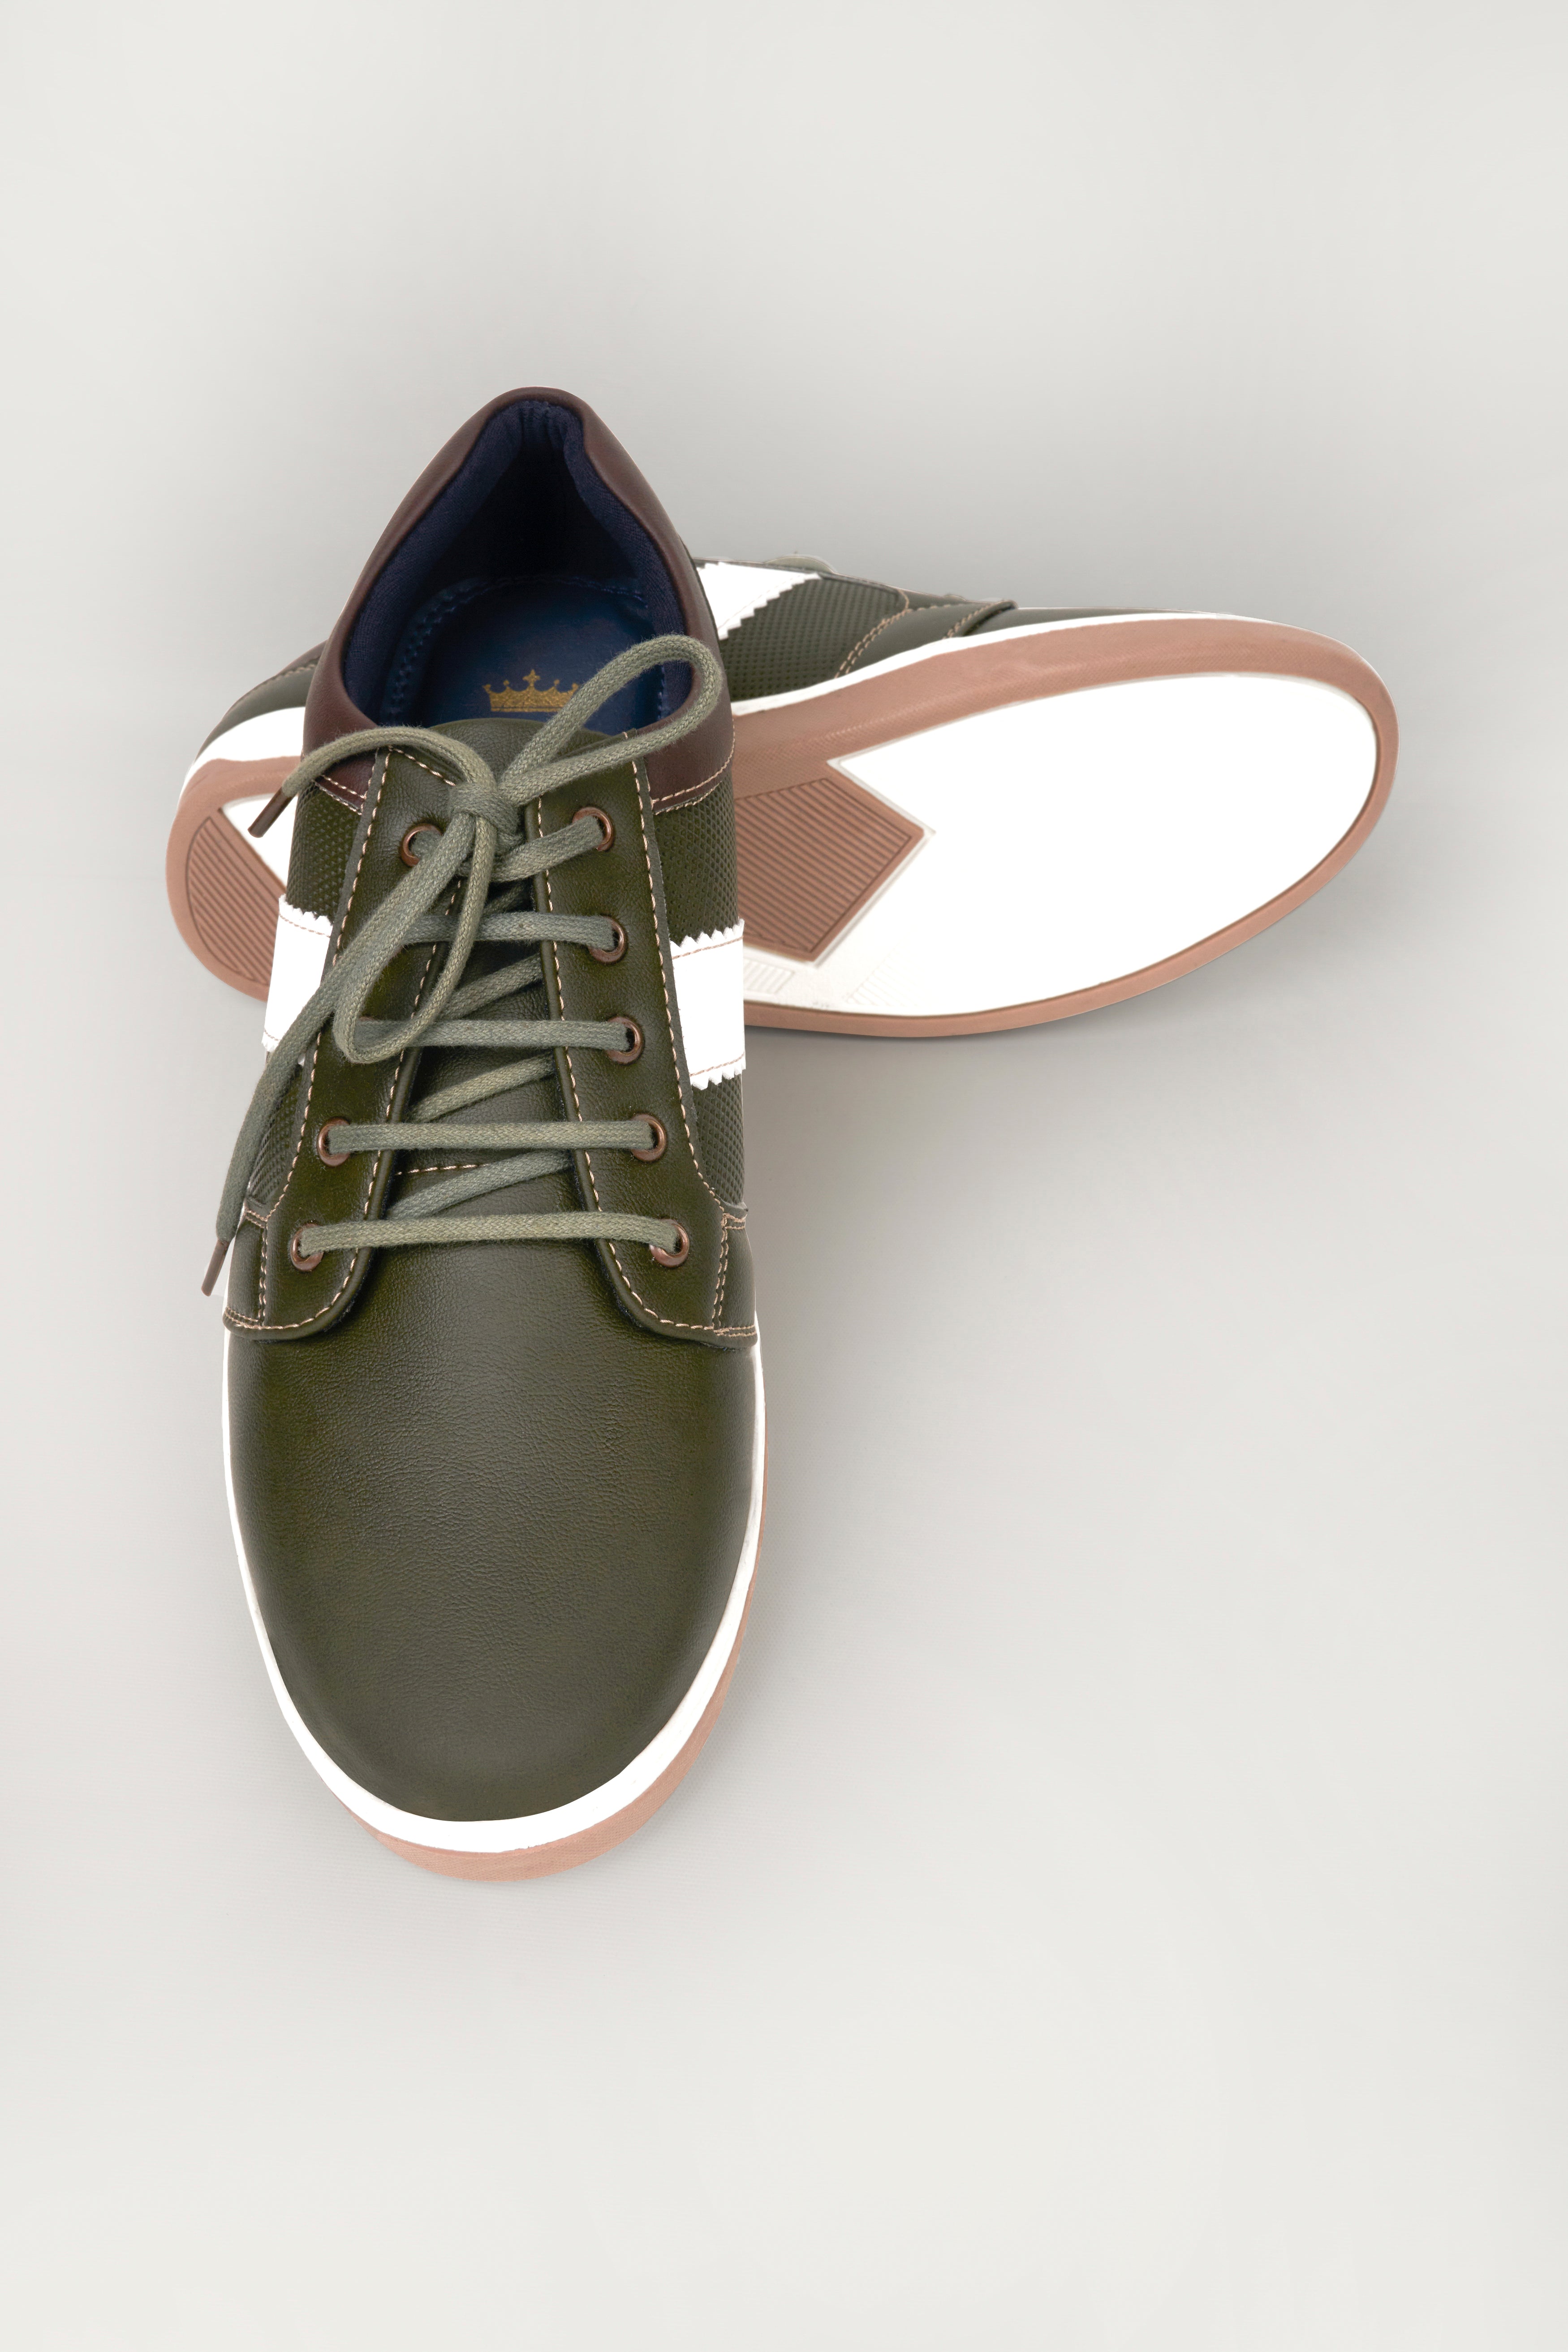 Dark Green Vegan Leather Derby Shoes FT118-6, FT118-7, FT118-8, FT118-9, FT118-10, FT118-11